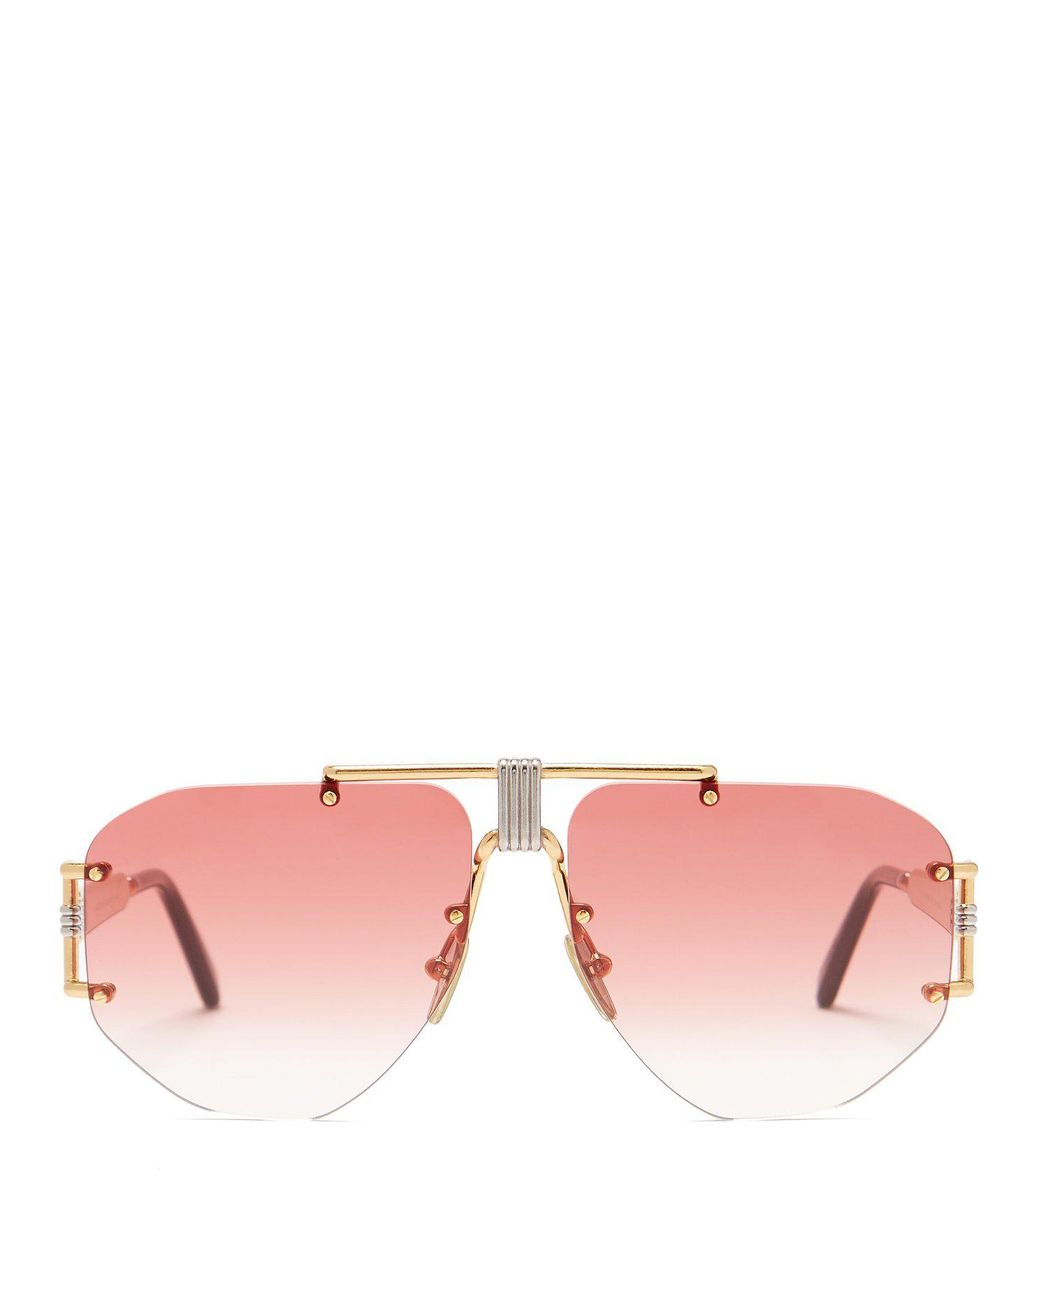 Celine Gold Aviator Sunglasses | vlr.eng.br